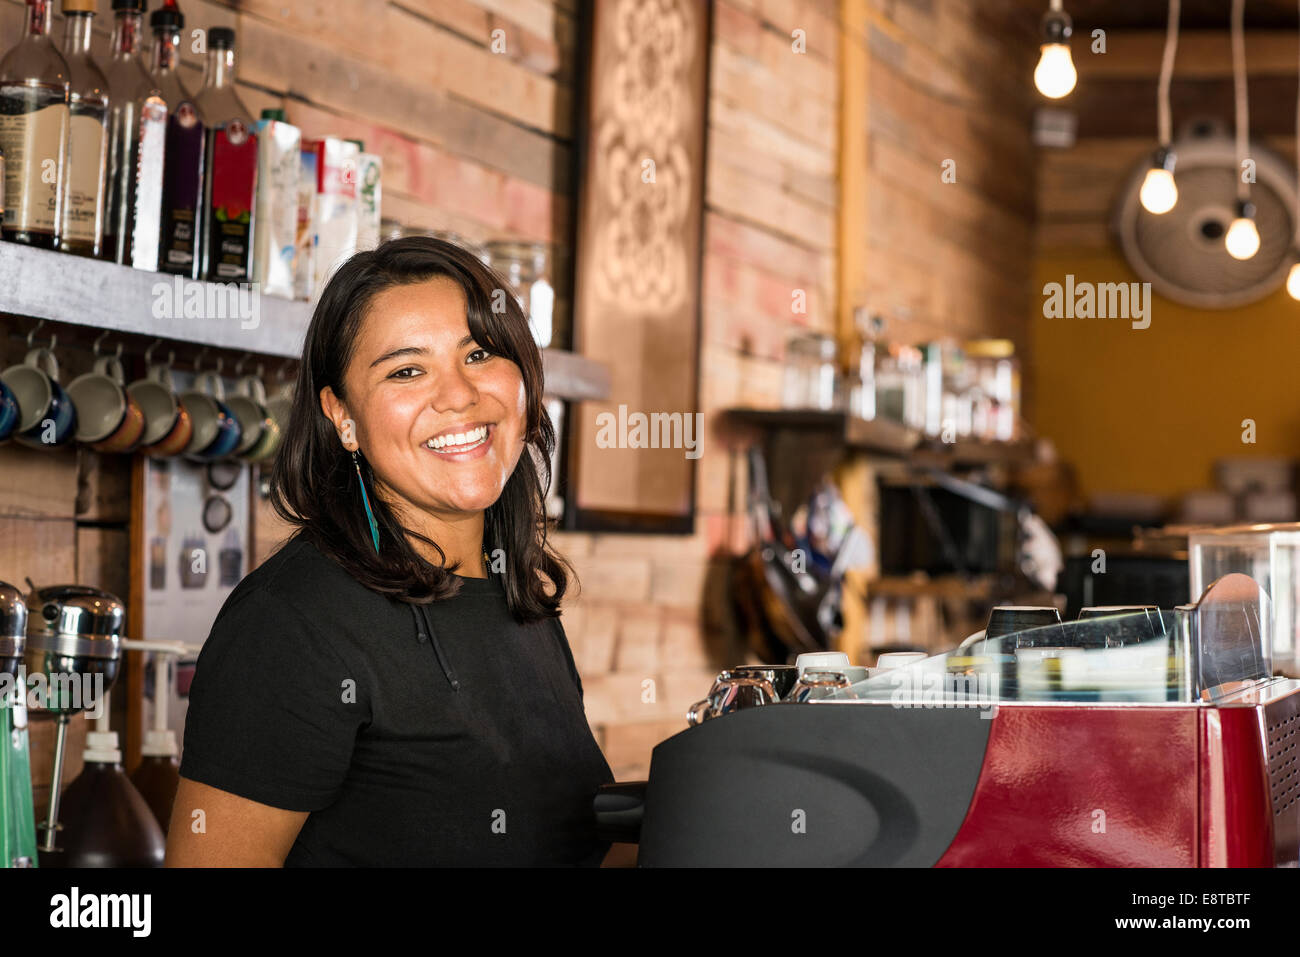 Smiling Hispanic woman working in coffee shop Stock Photo